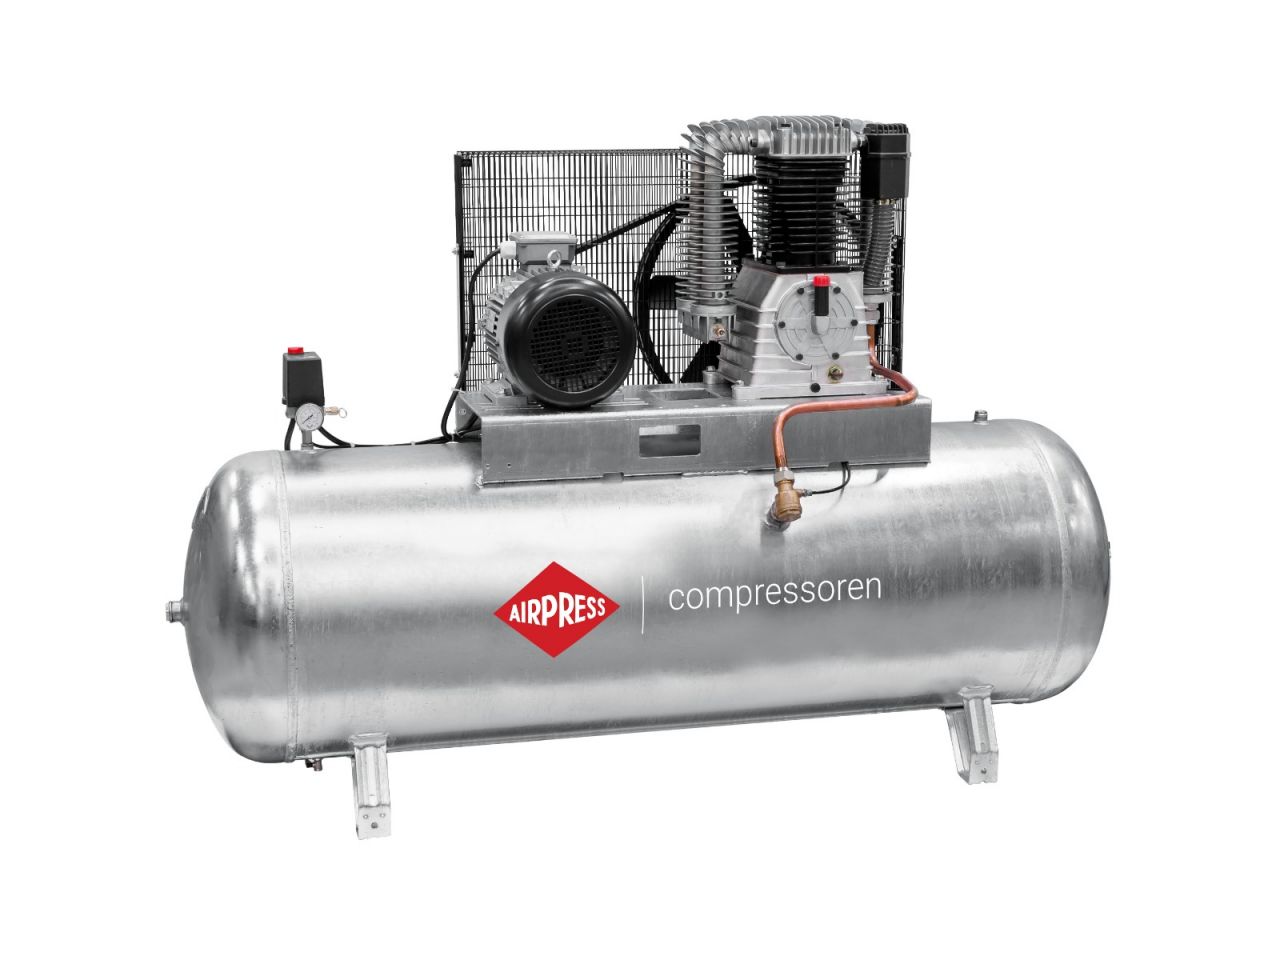 Compresor de aire de una etapa profesional G 1500-500 Pro